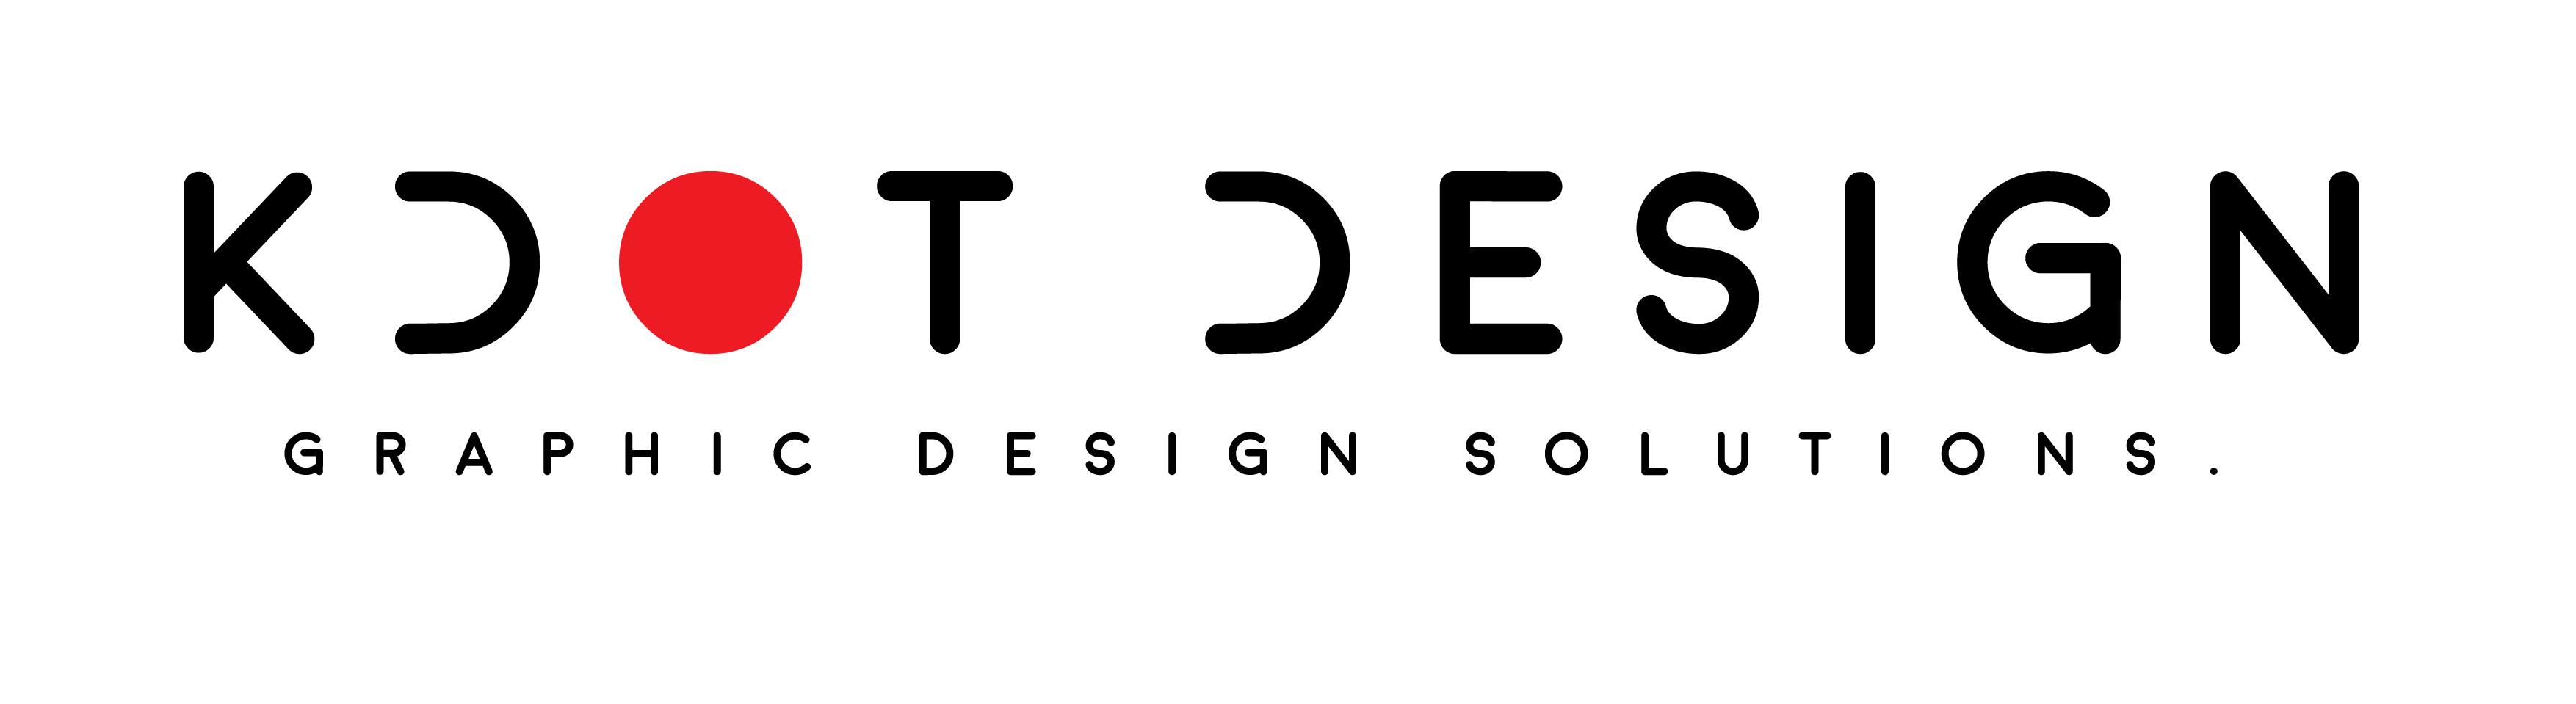 Kdot Design Banner